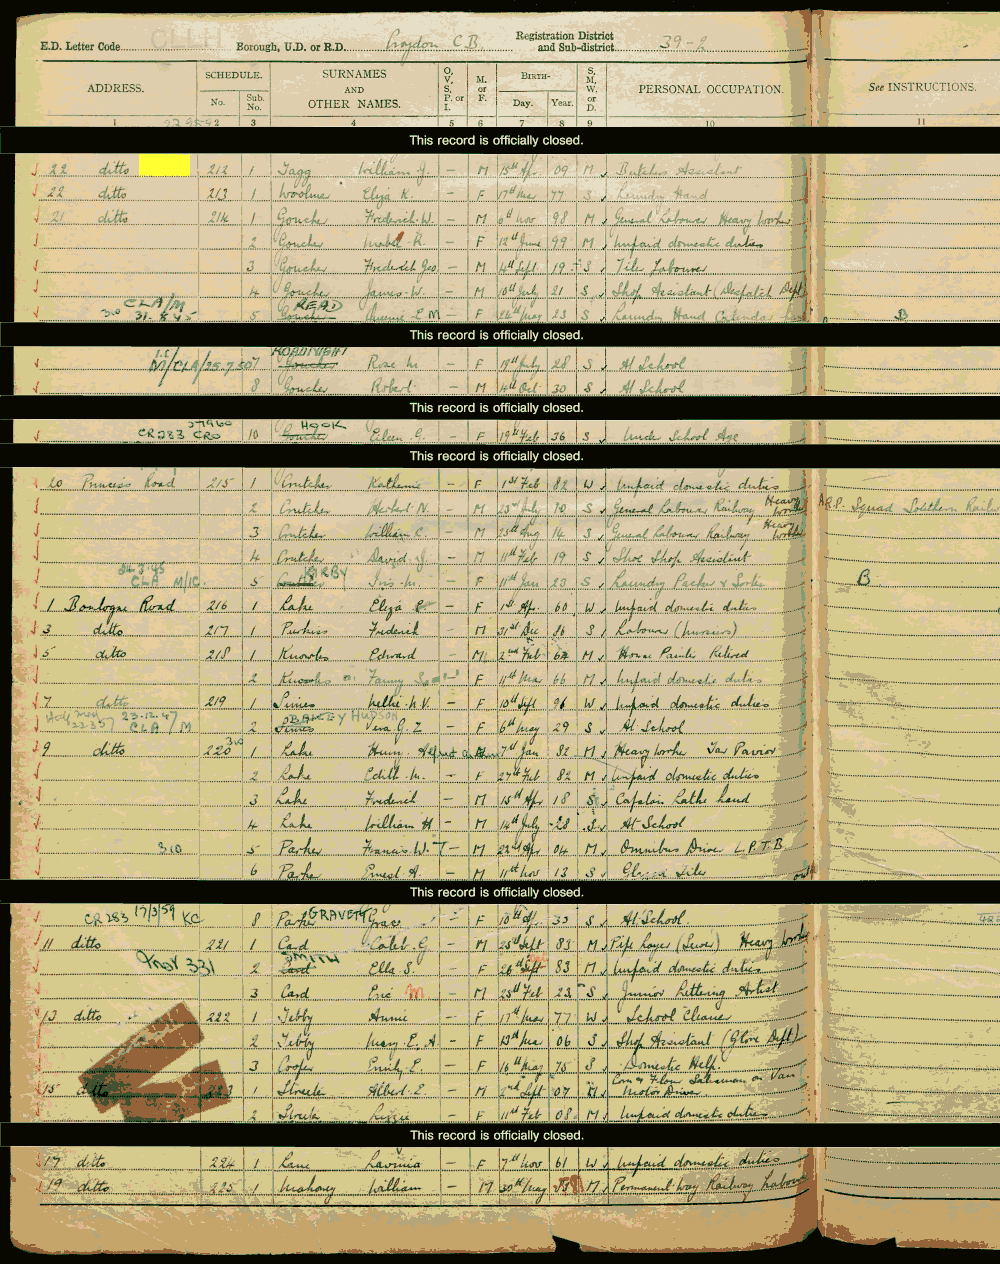 1939 census returns for William J Tagg